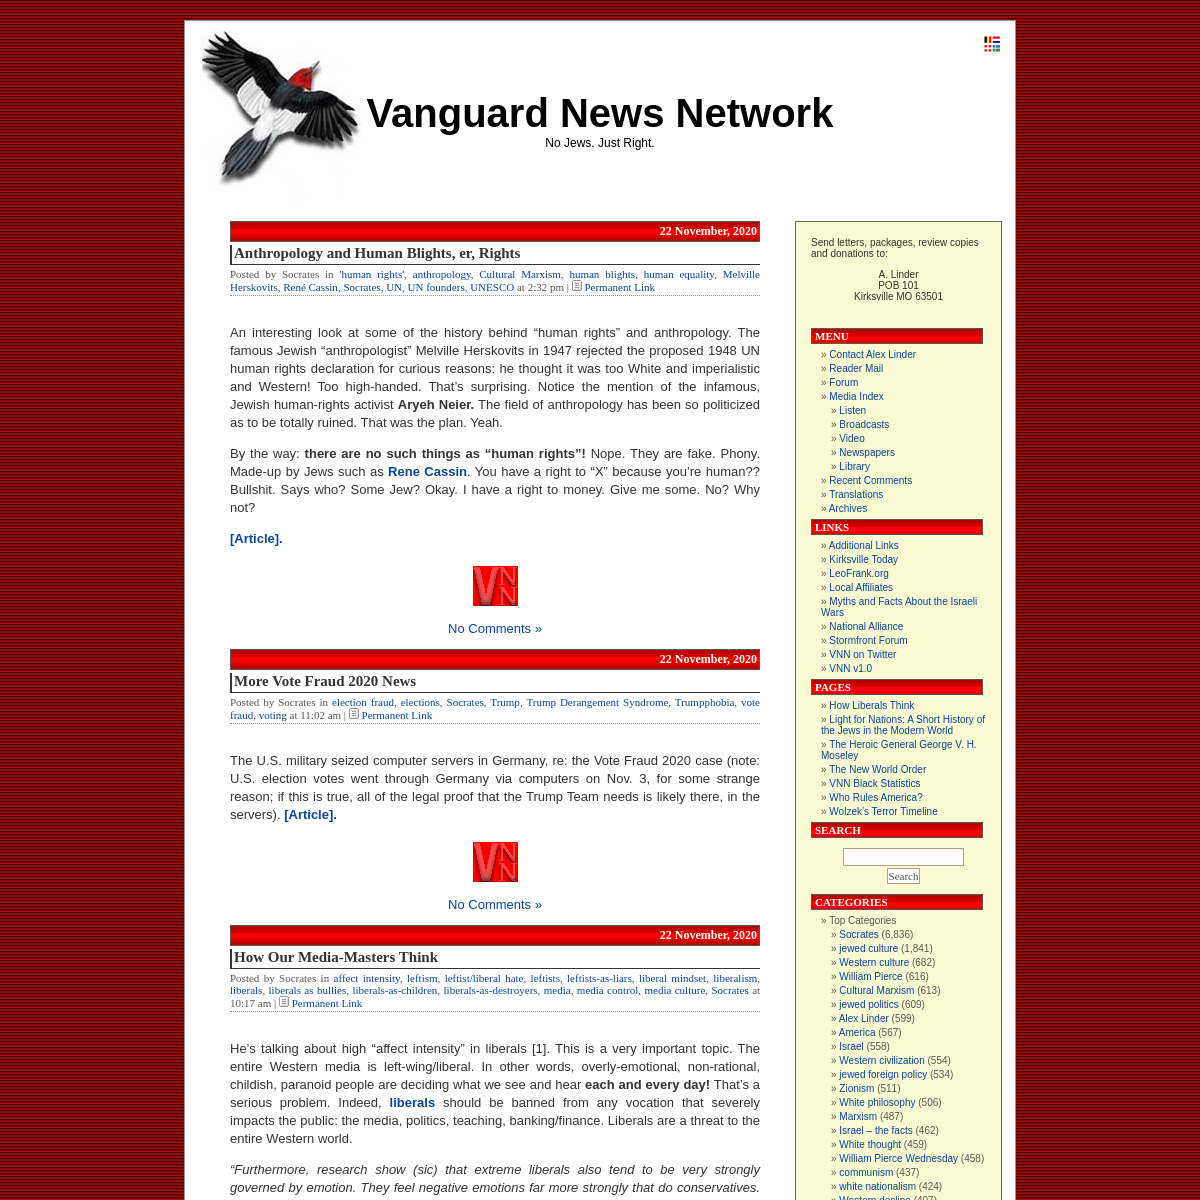 A complete backup of vanguardnewsnetwork.com